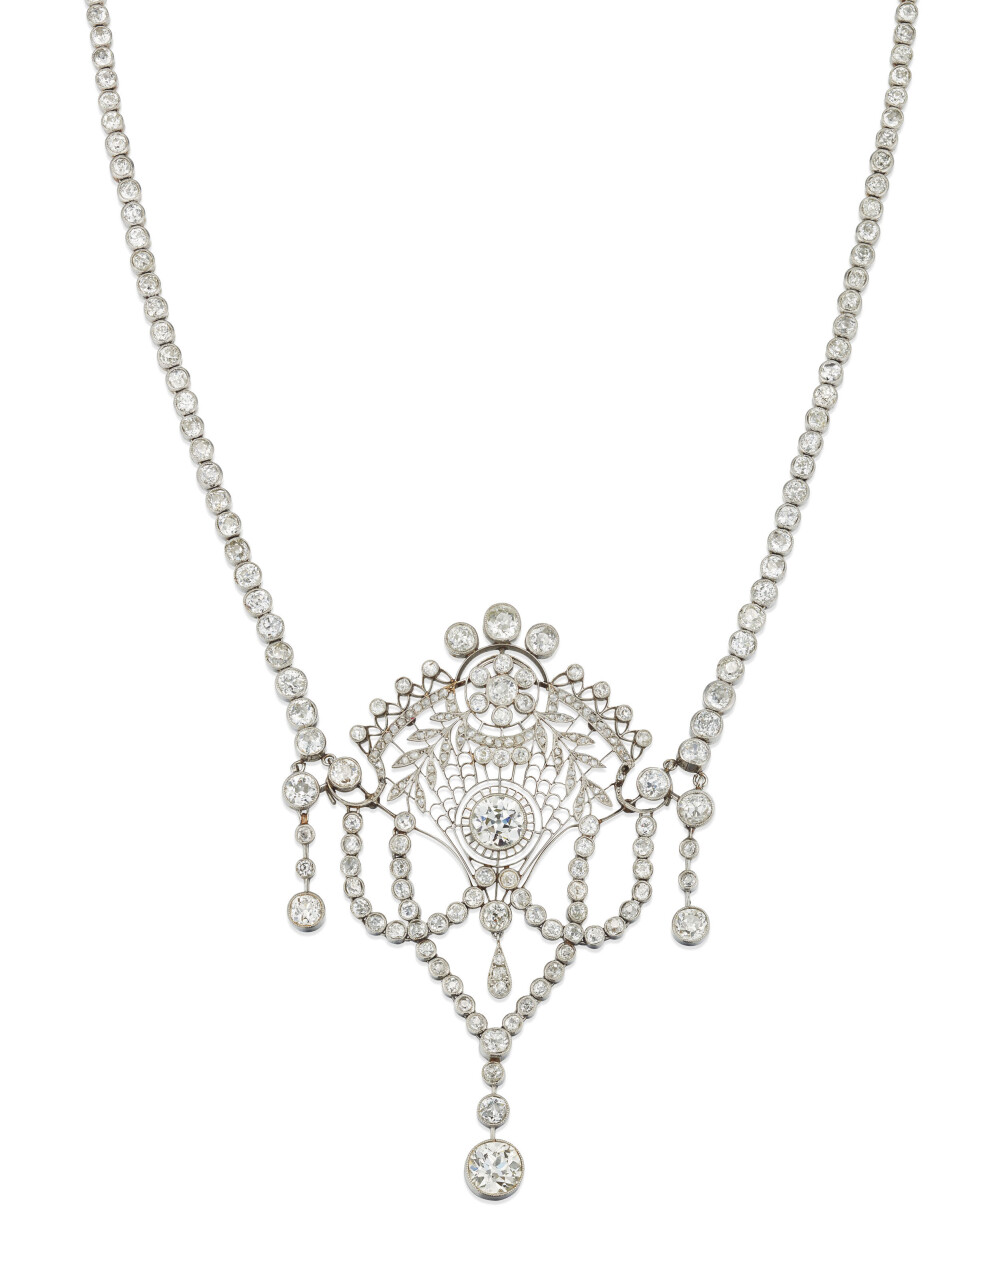 Christie's 佳士得伦敦春拍 钻石吊坠项链 约1910年 镶嵌老式和玫瑰式切割钻石，长44.0厘米，中心面板9.8厘米。成交价5万英镑